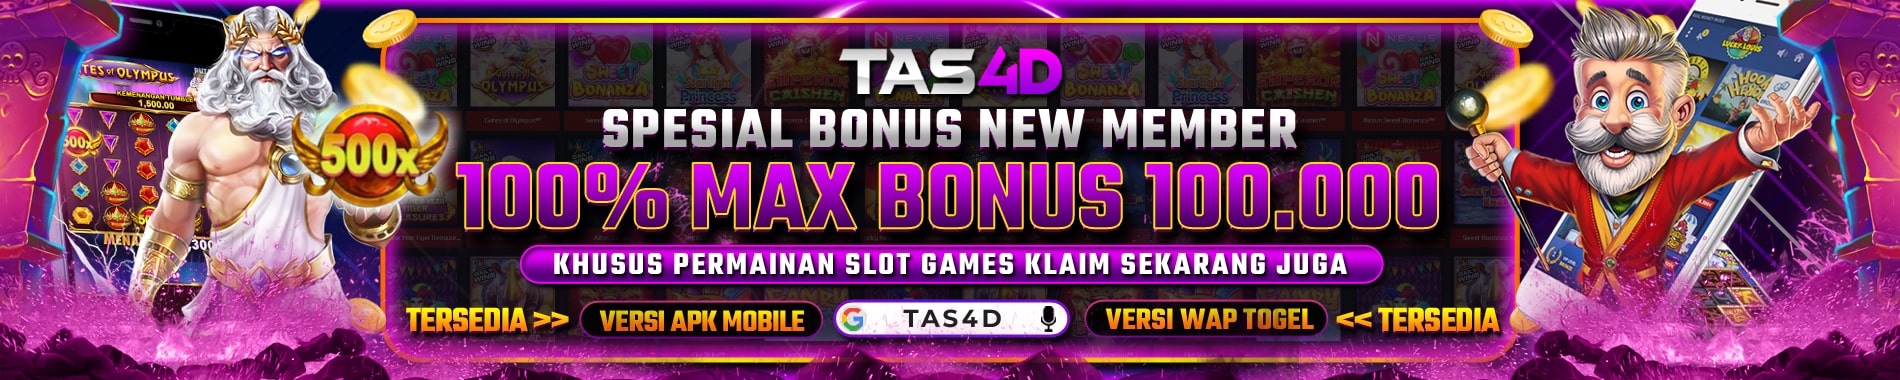 bonus new member tas4d